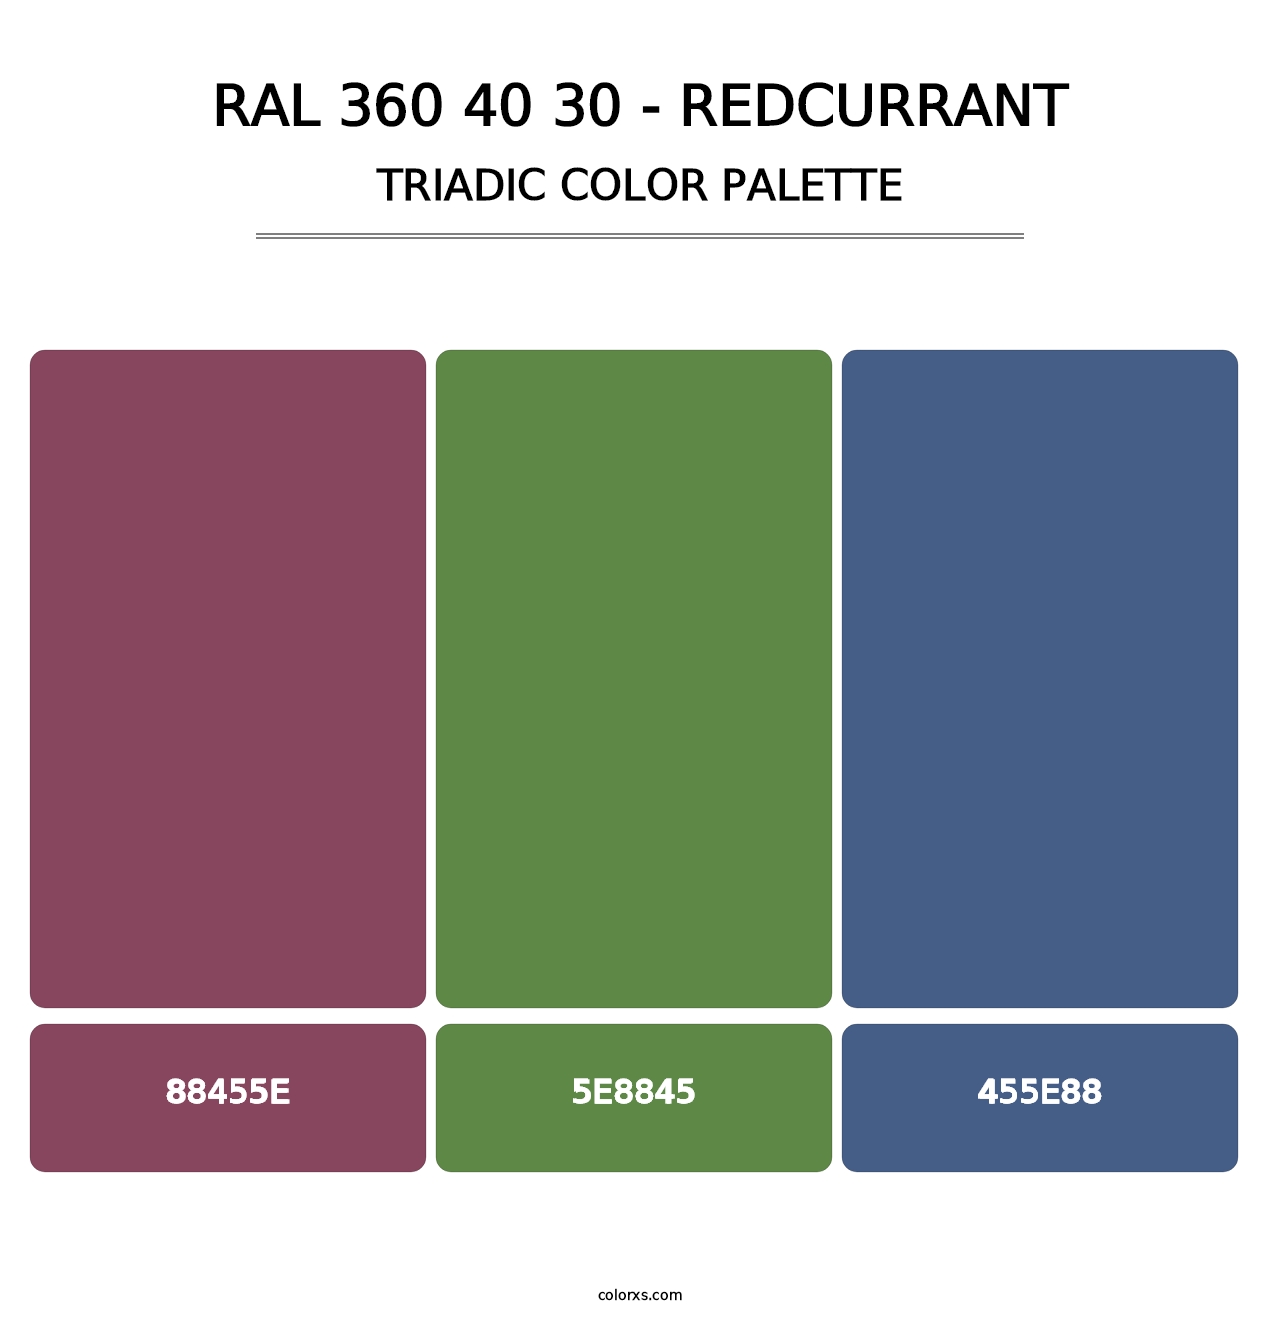 RAL 360 40 30 - Redcurrant - Triadic Color Palette